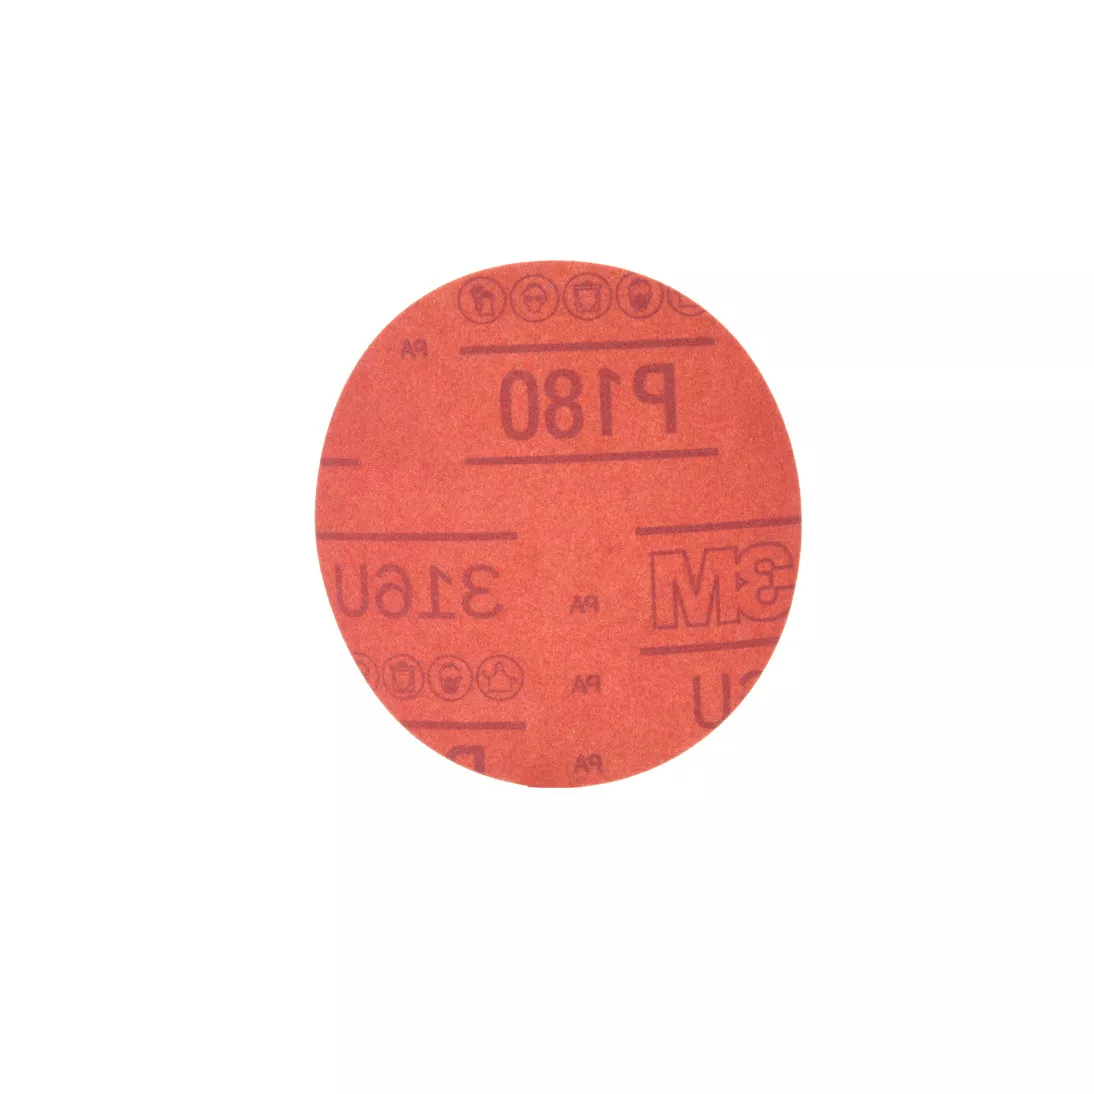 3M™ Hookit™ Red Abrasive Disc, 01298, 5 in, P180, 50 discs per carton, 6
cartons per case